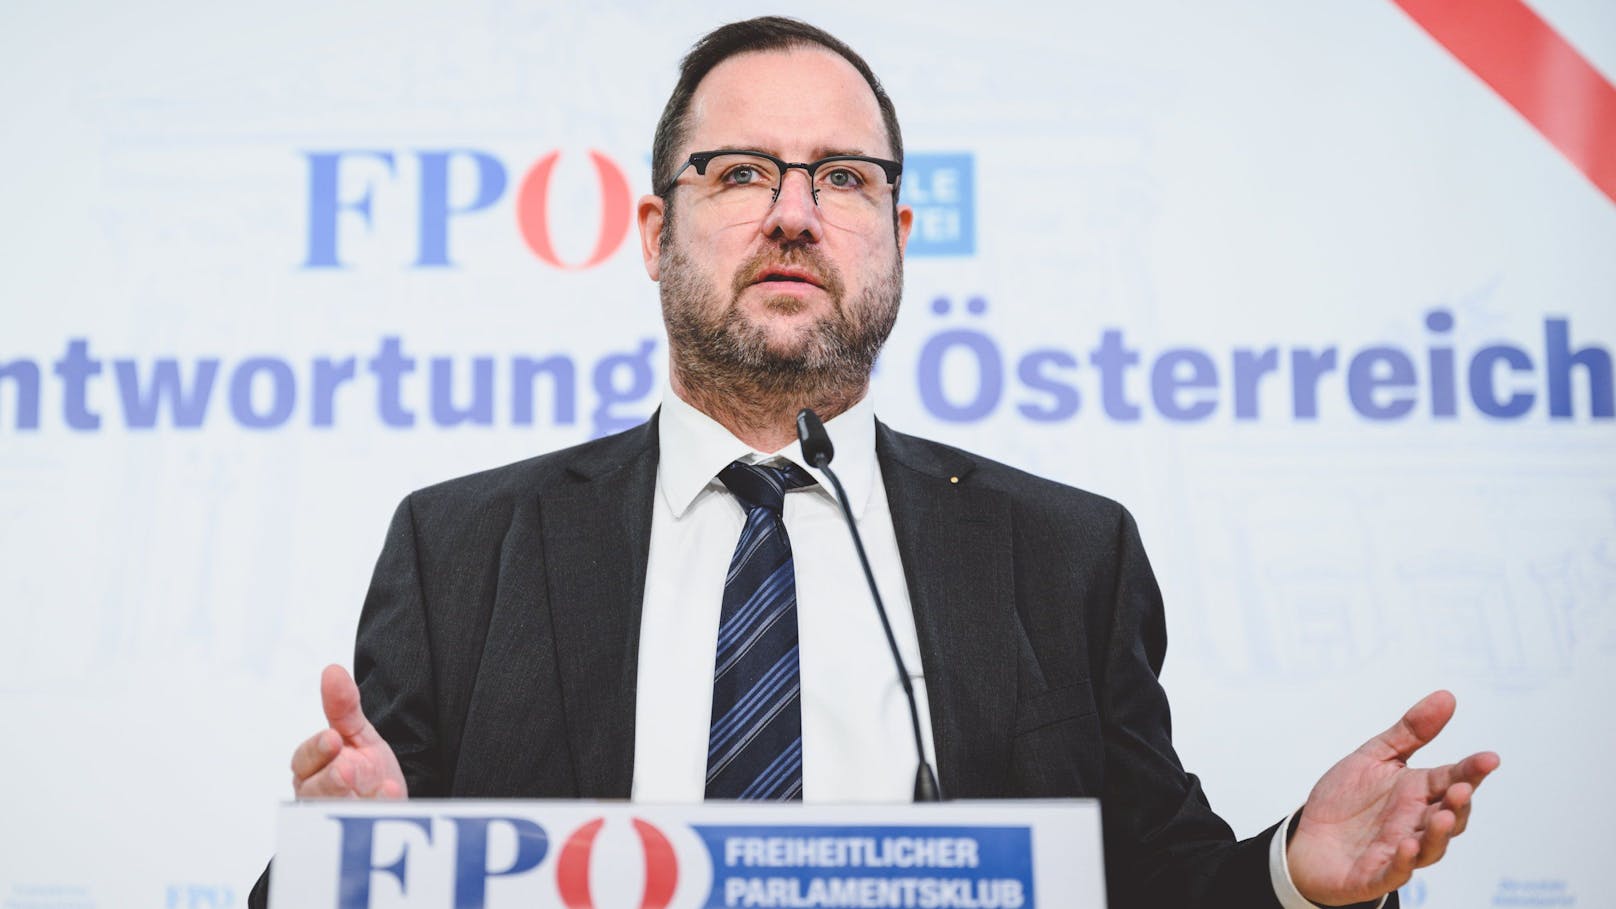 FPÖ-Mandatar Christian Hafenecker zürnt über die teure Auslandsreise.